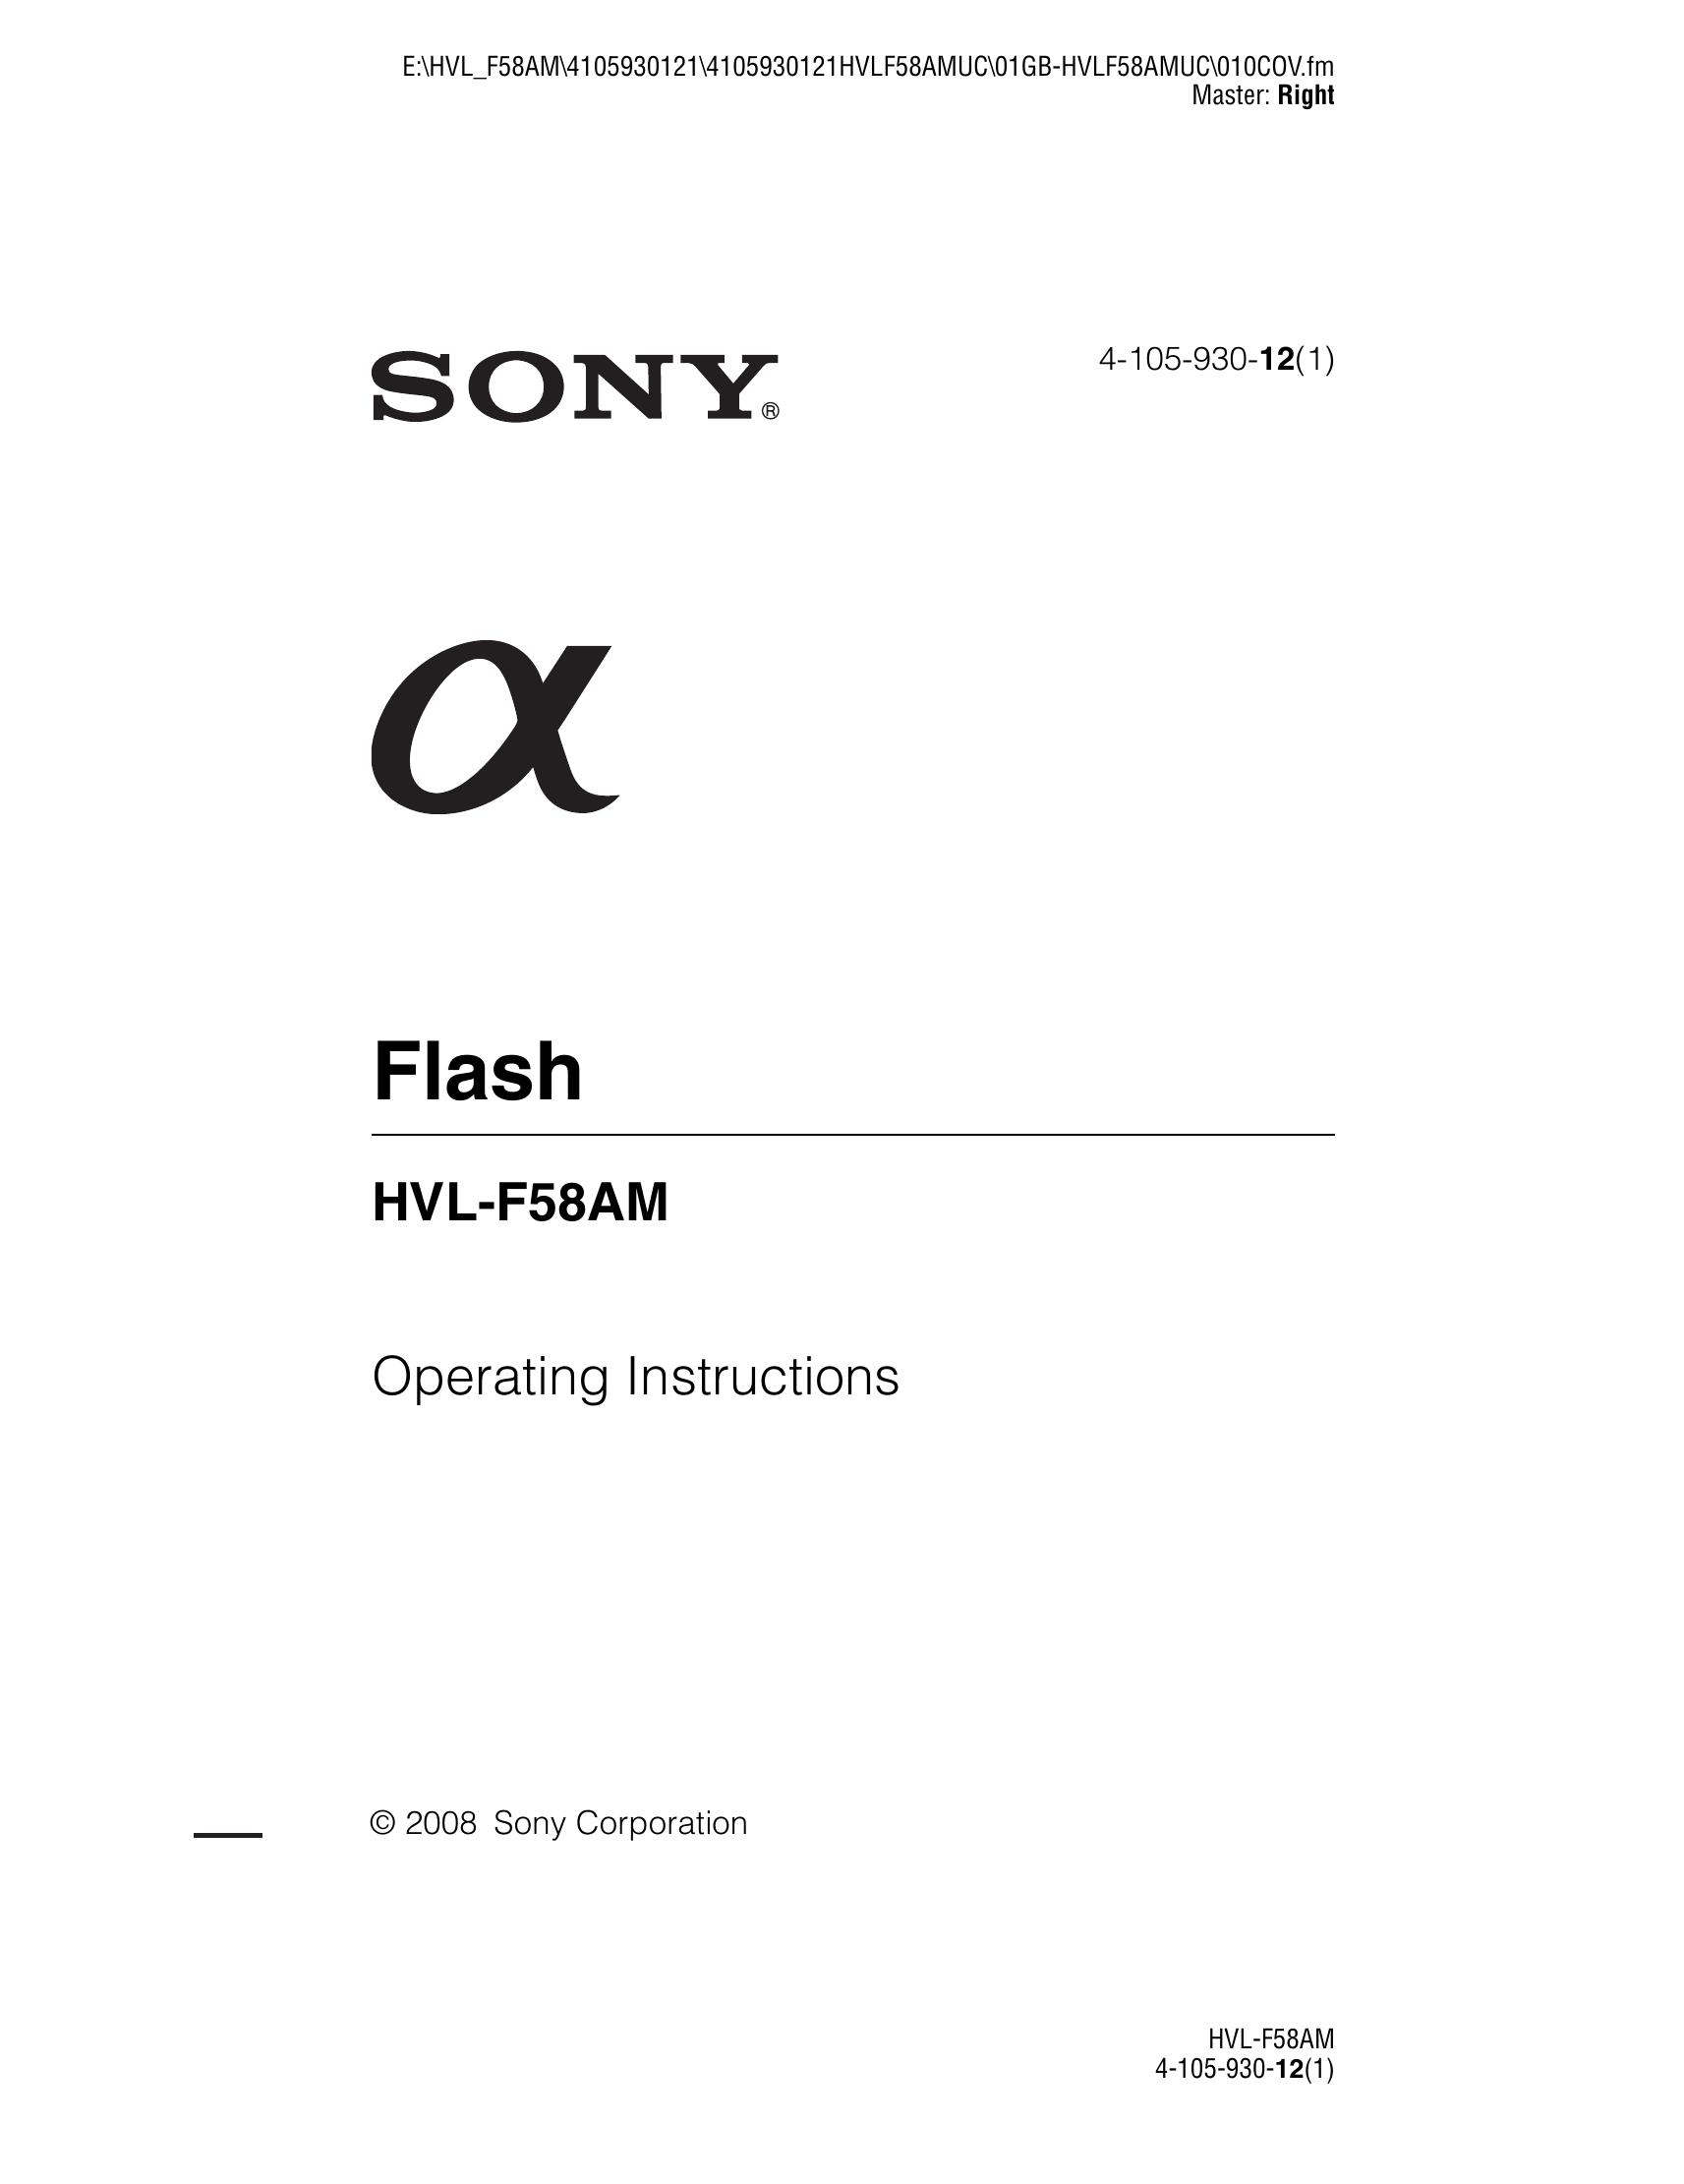 Sony 4-105-930-12(1) Camera Flash User Manual